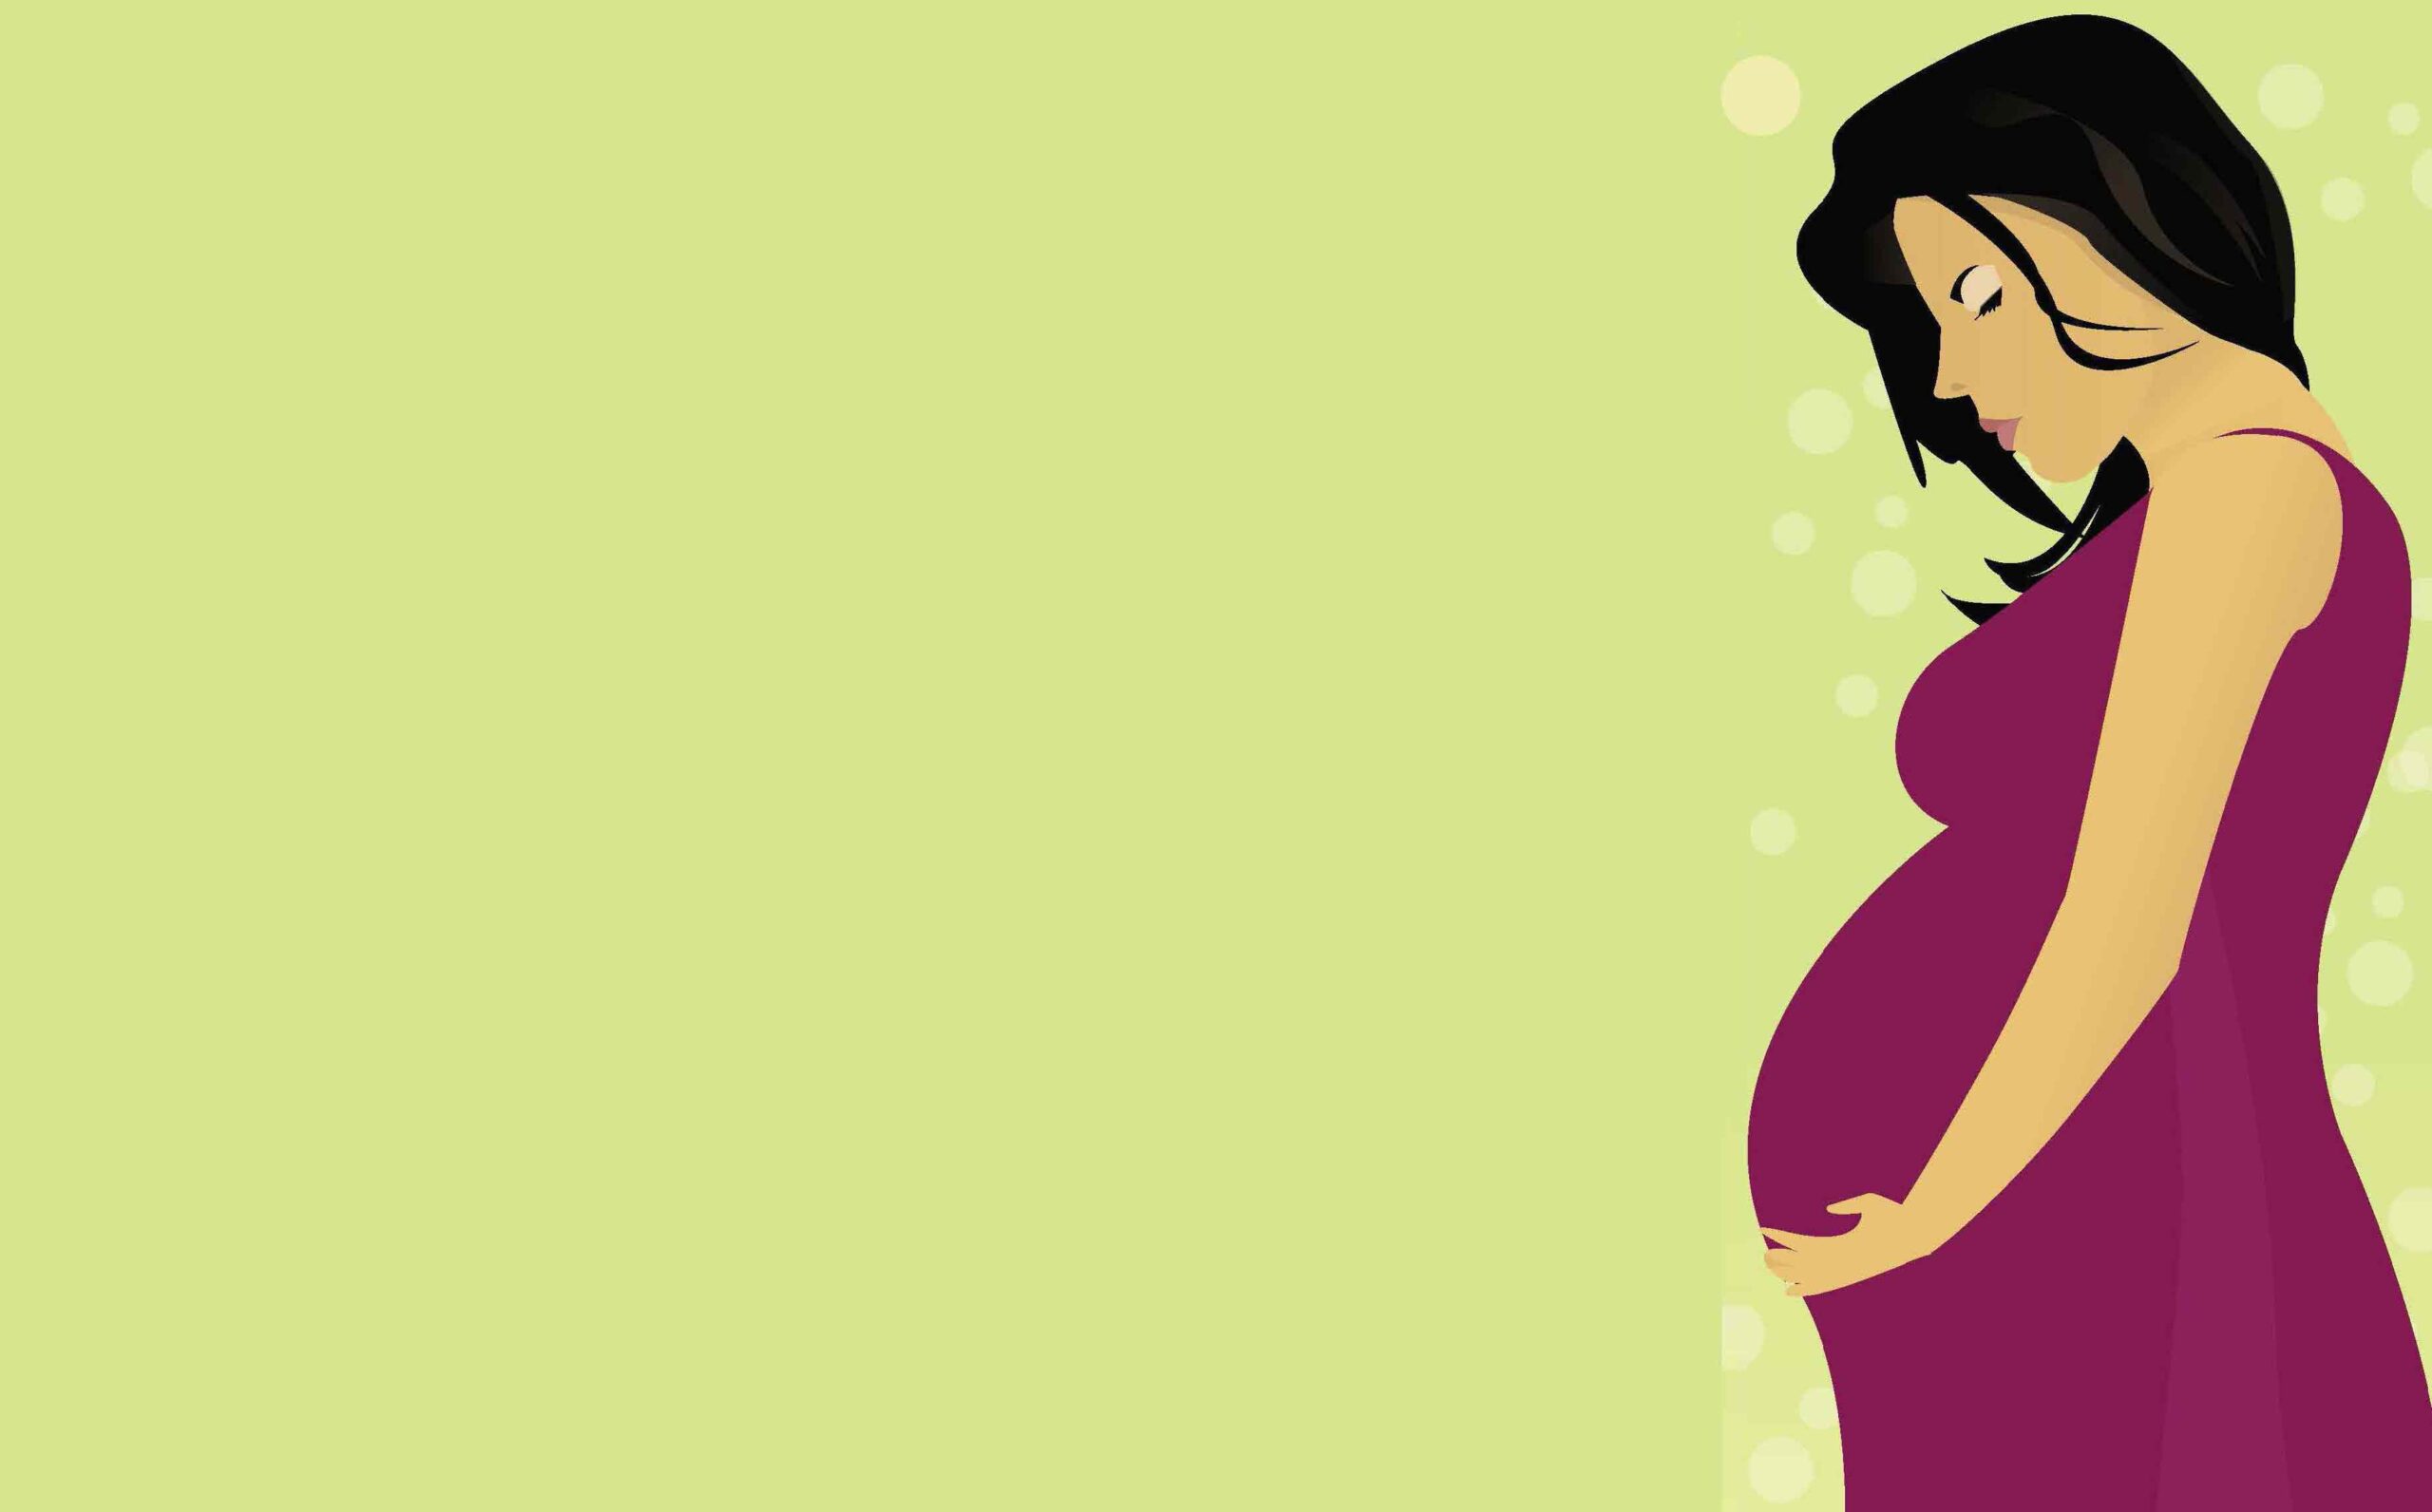 Antenatal care for maternal health